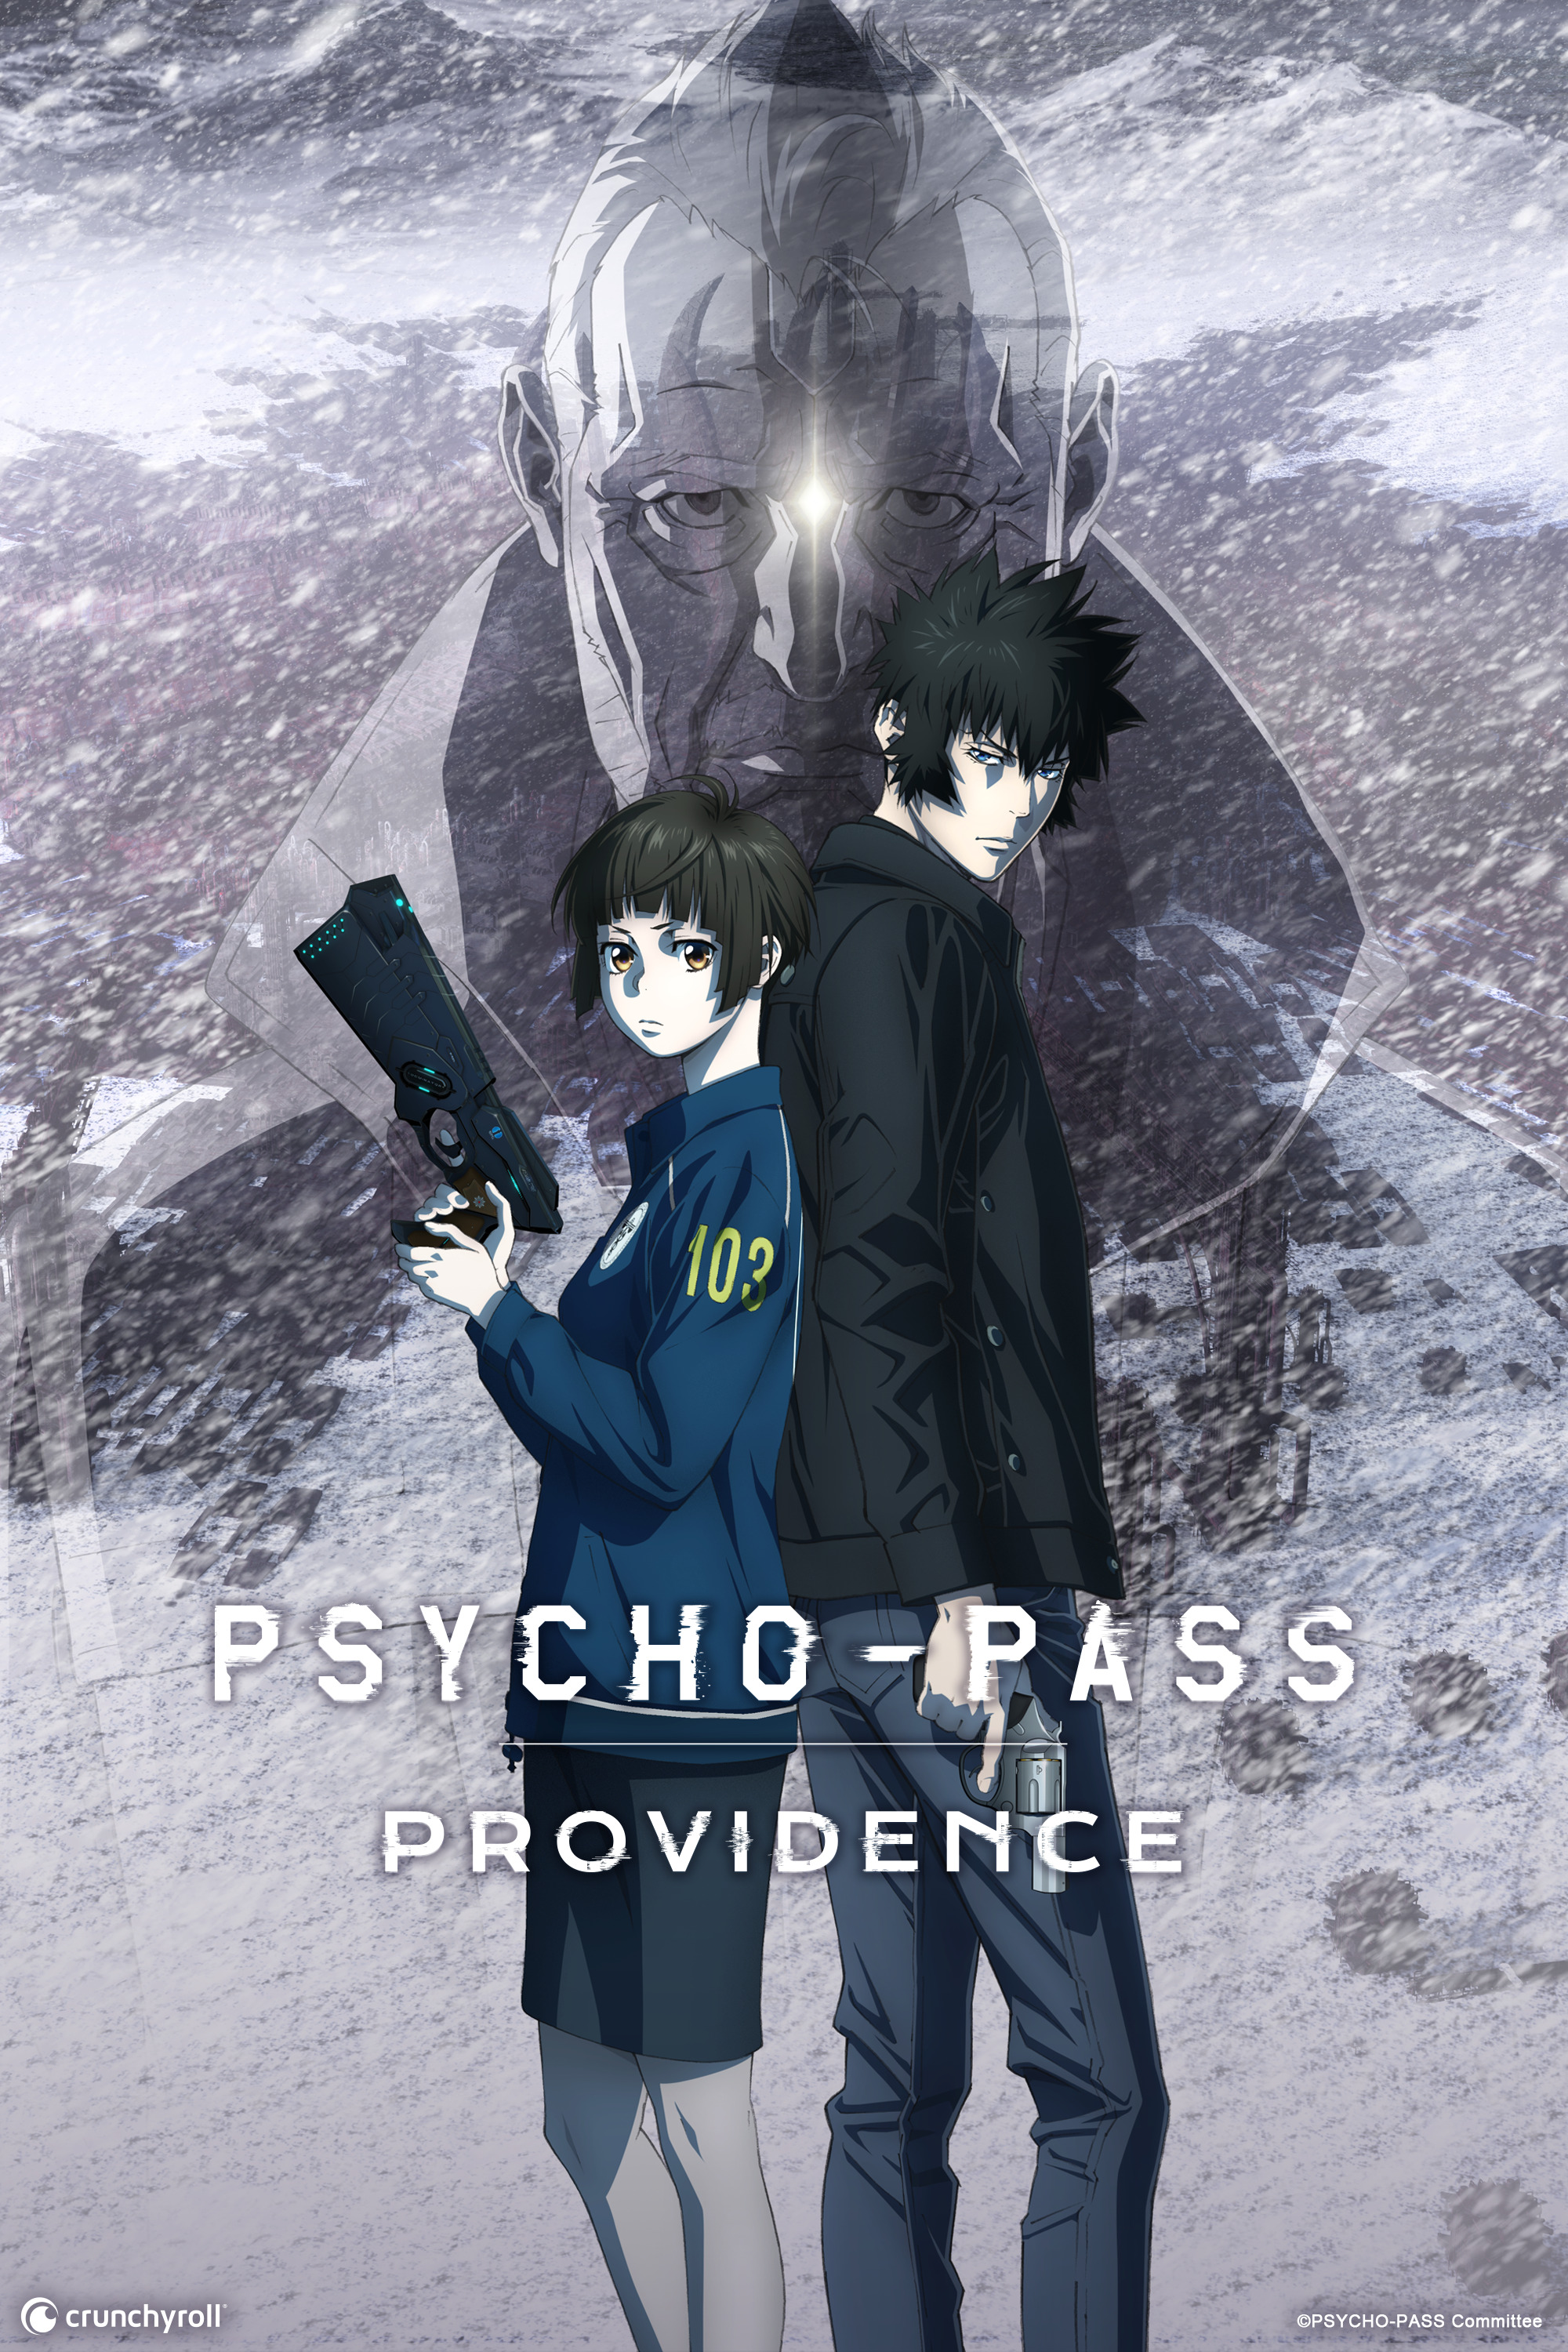 Promocional para la película Psycho-Pass